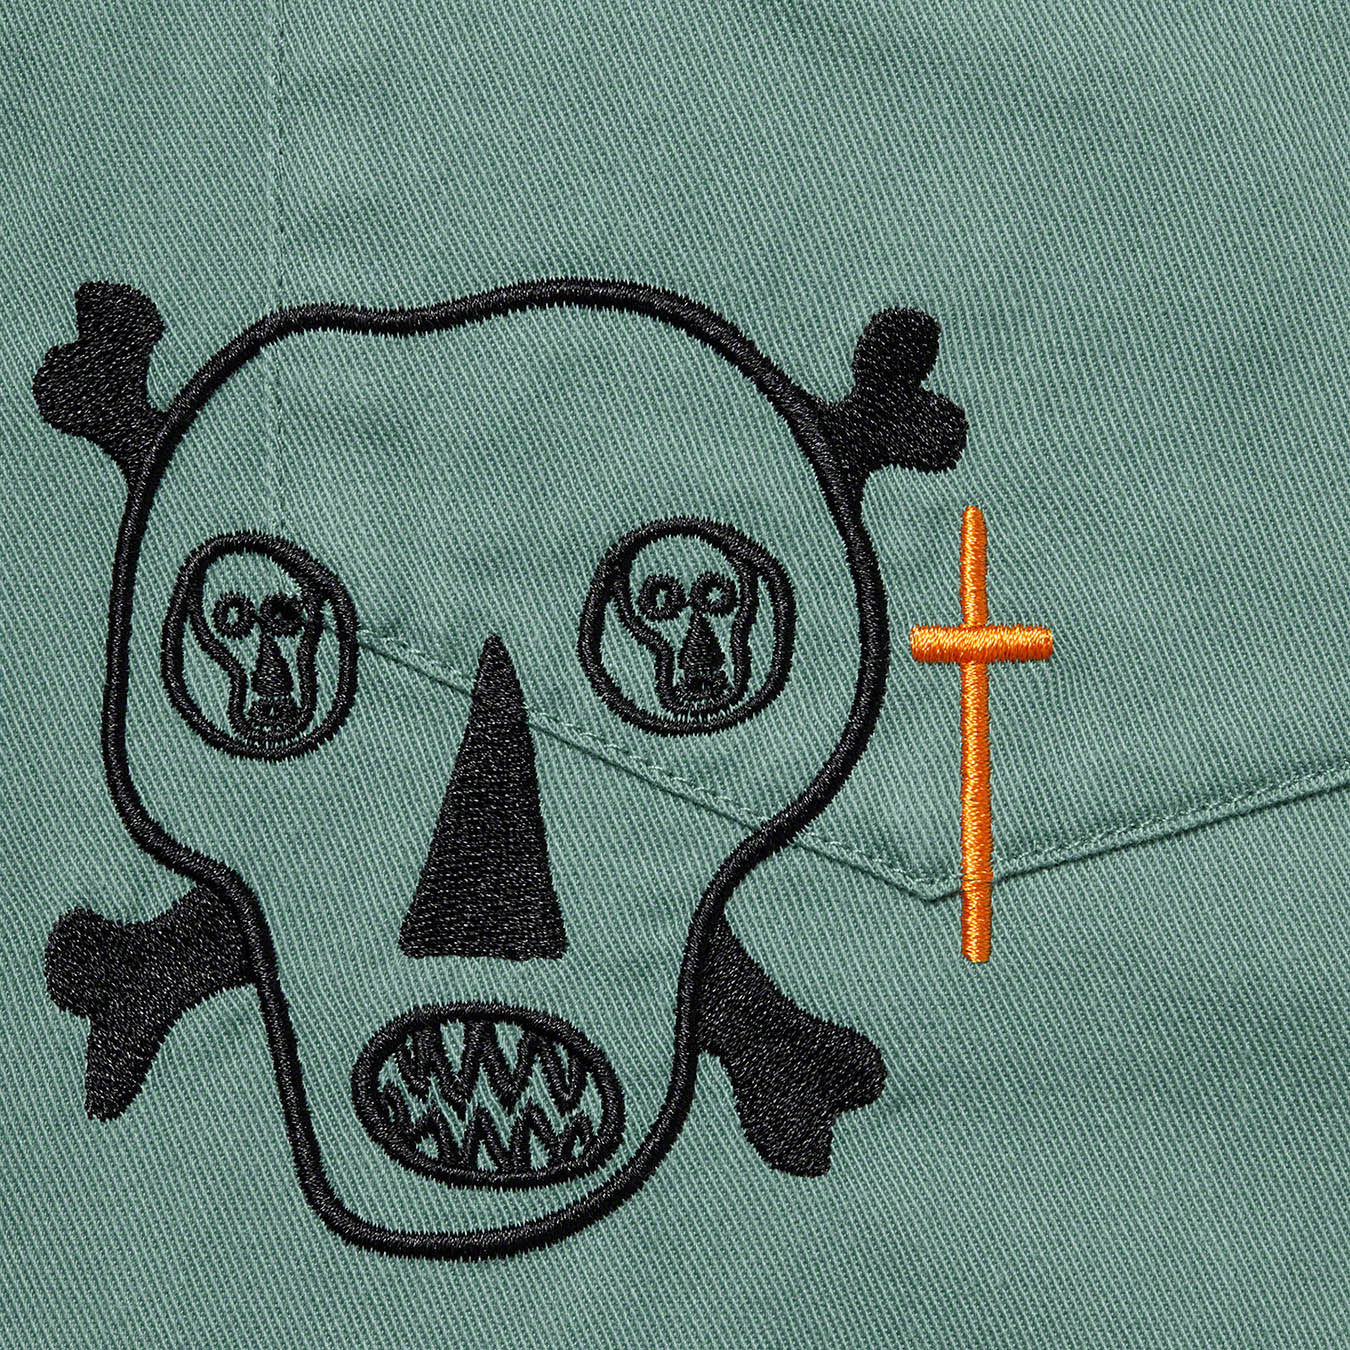 Supreme Clayton Patterson/Supreme Skulls Embroidered Work Shirt